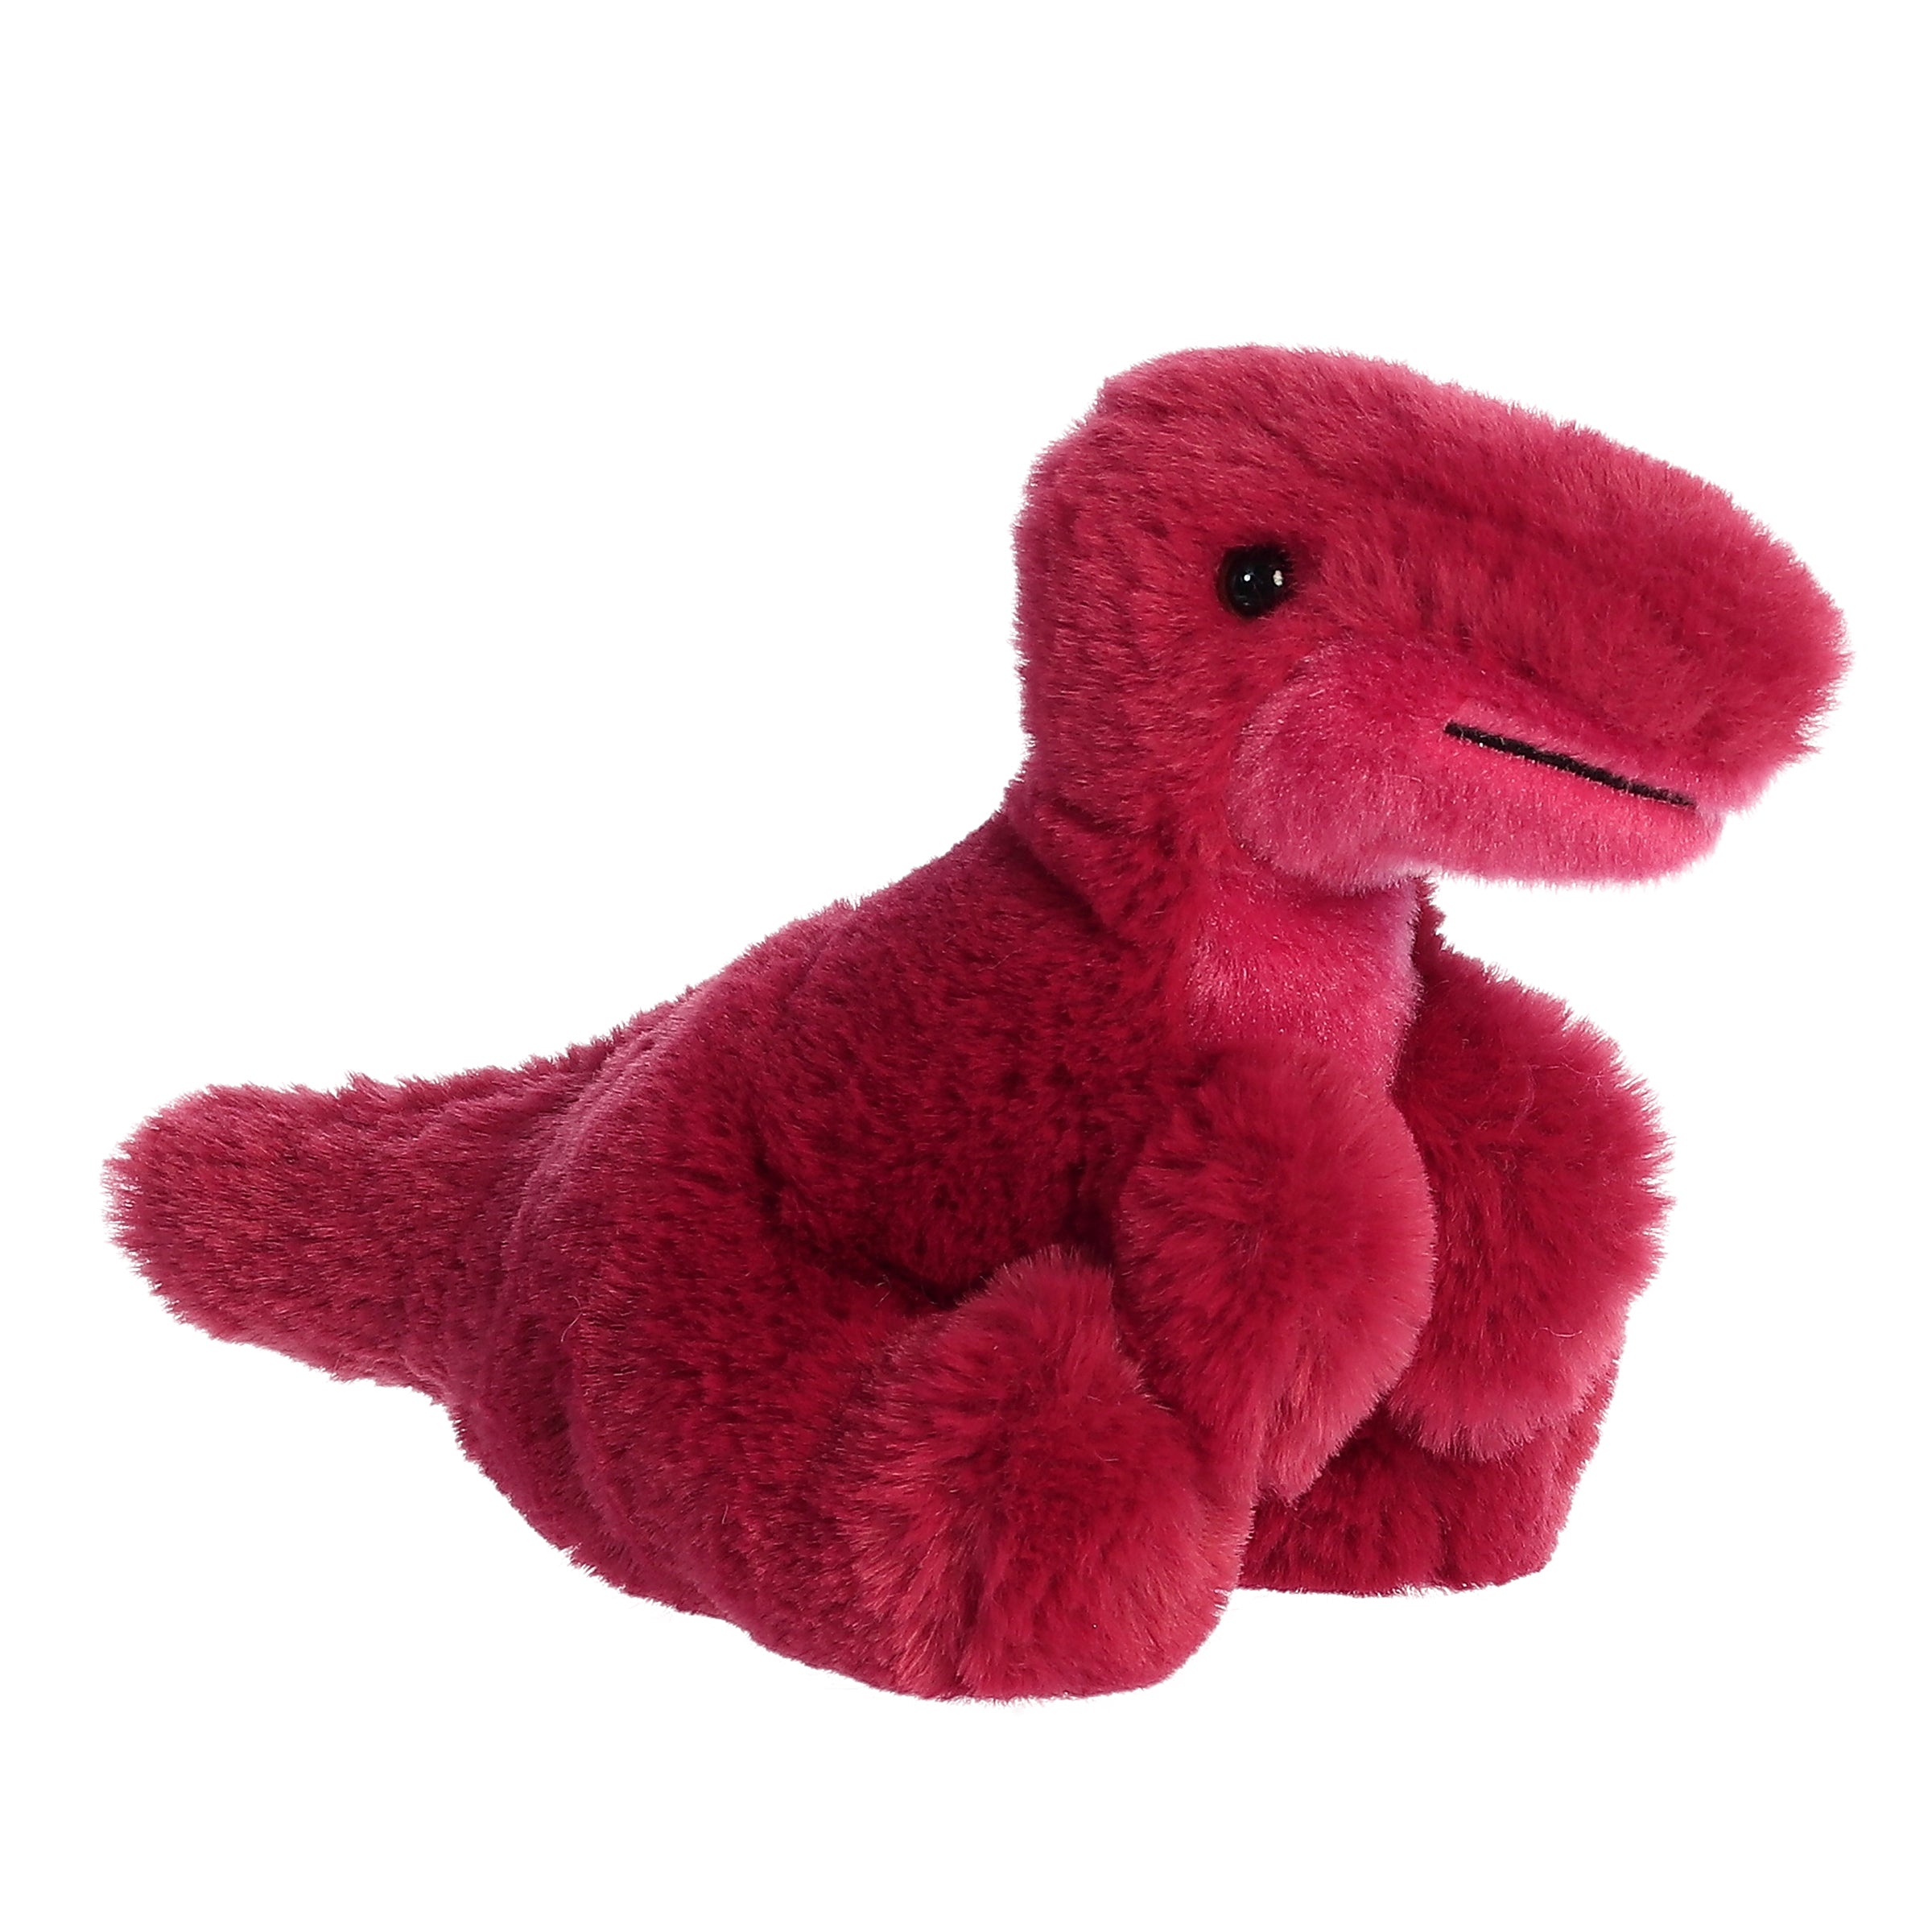 Vibrant red Velociraptor dinosaur stuffed animal Plushie from Mini Flopsie, a petite, lifelike companion for cuddles.